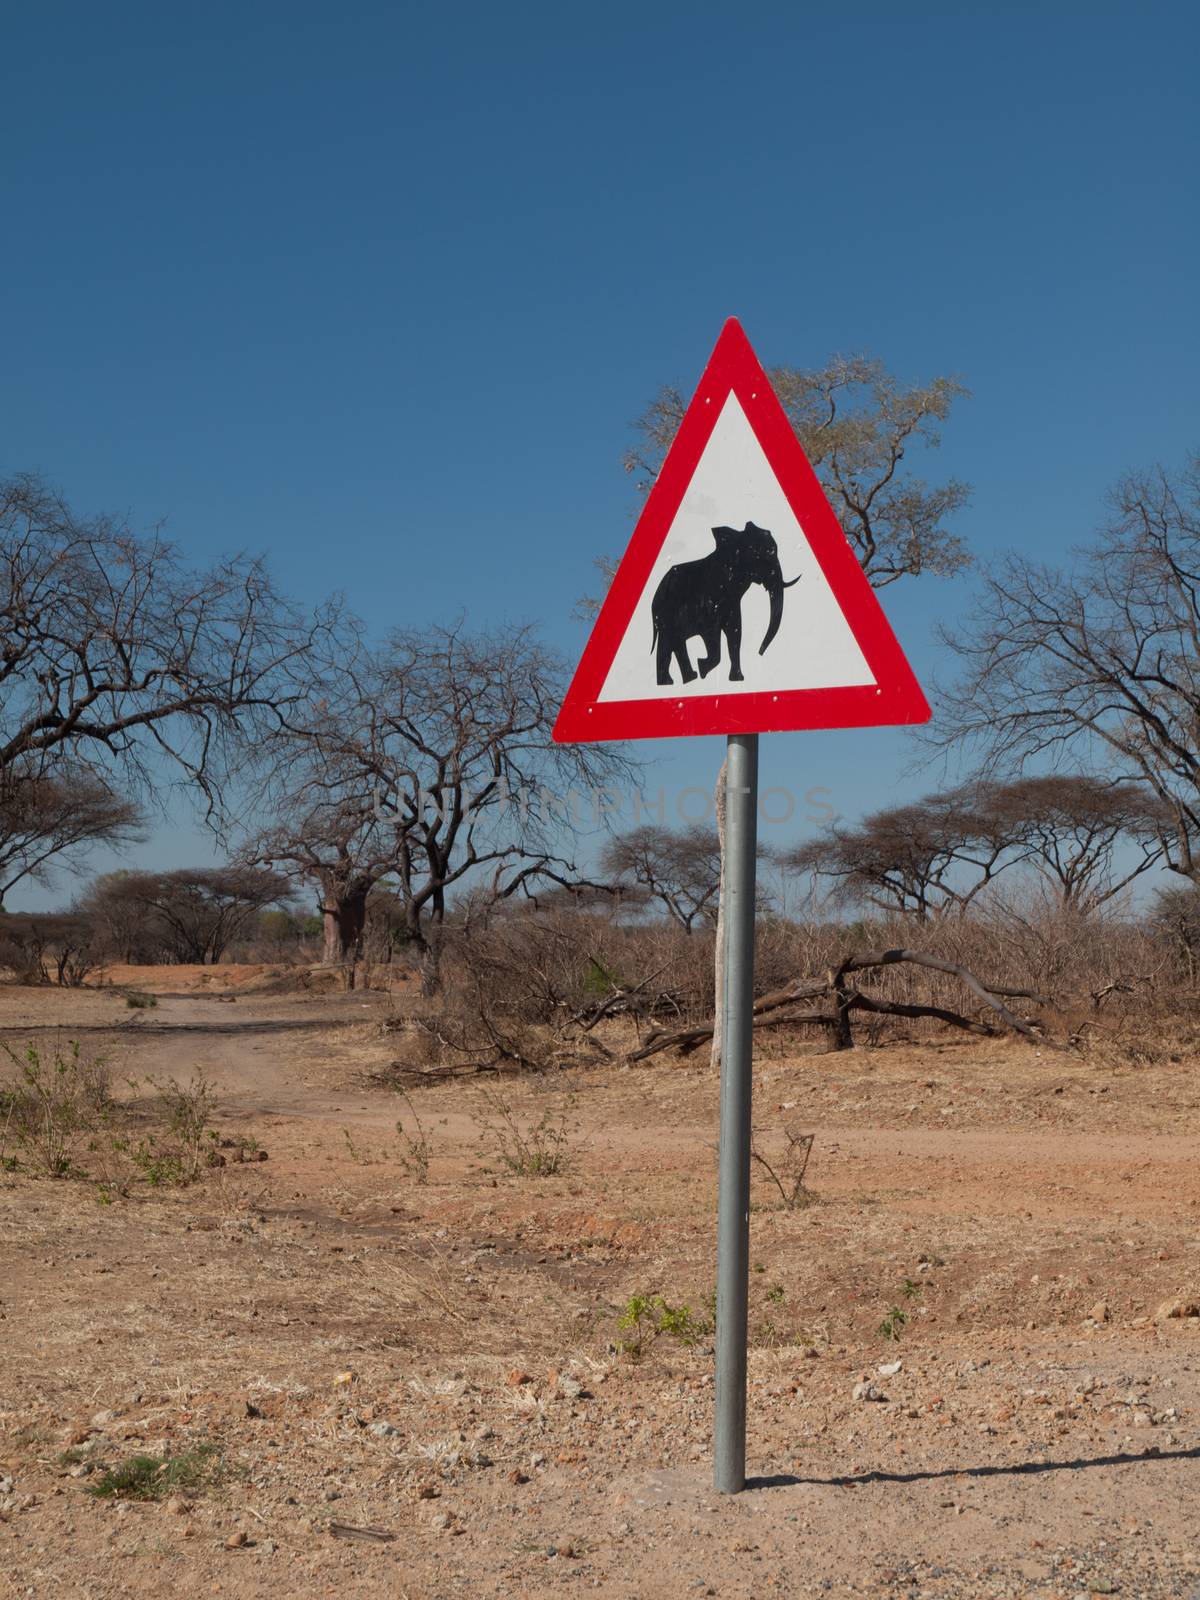 Beware of elephants - transportation sign